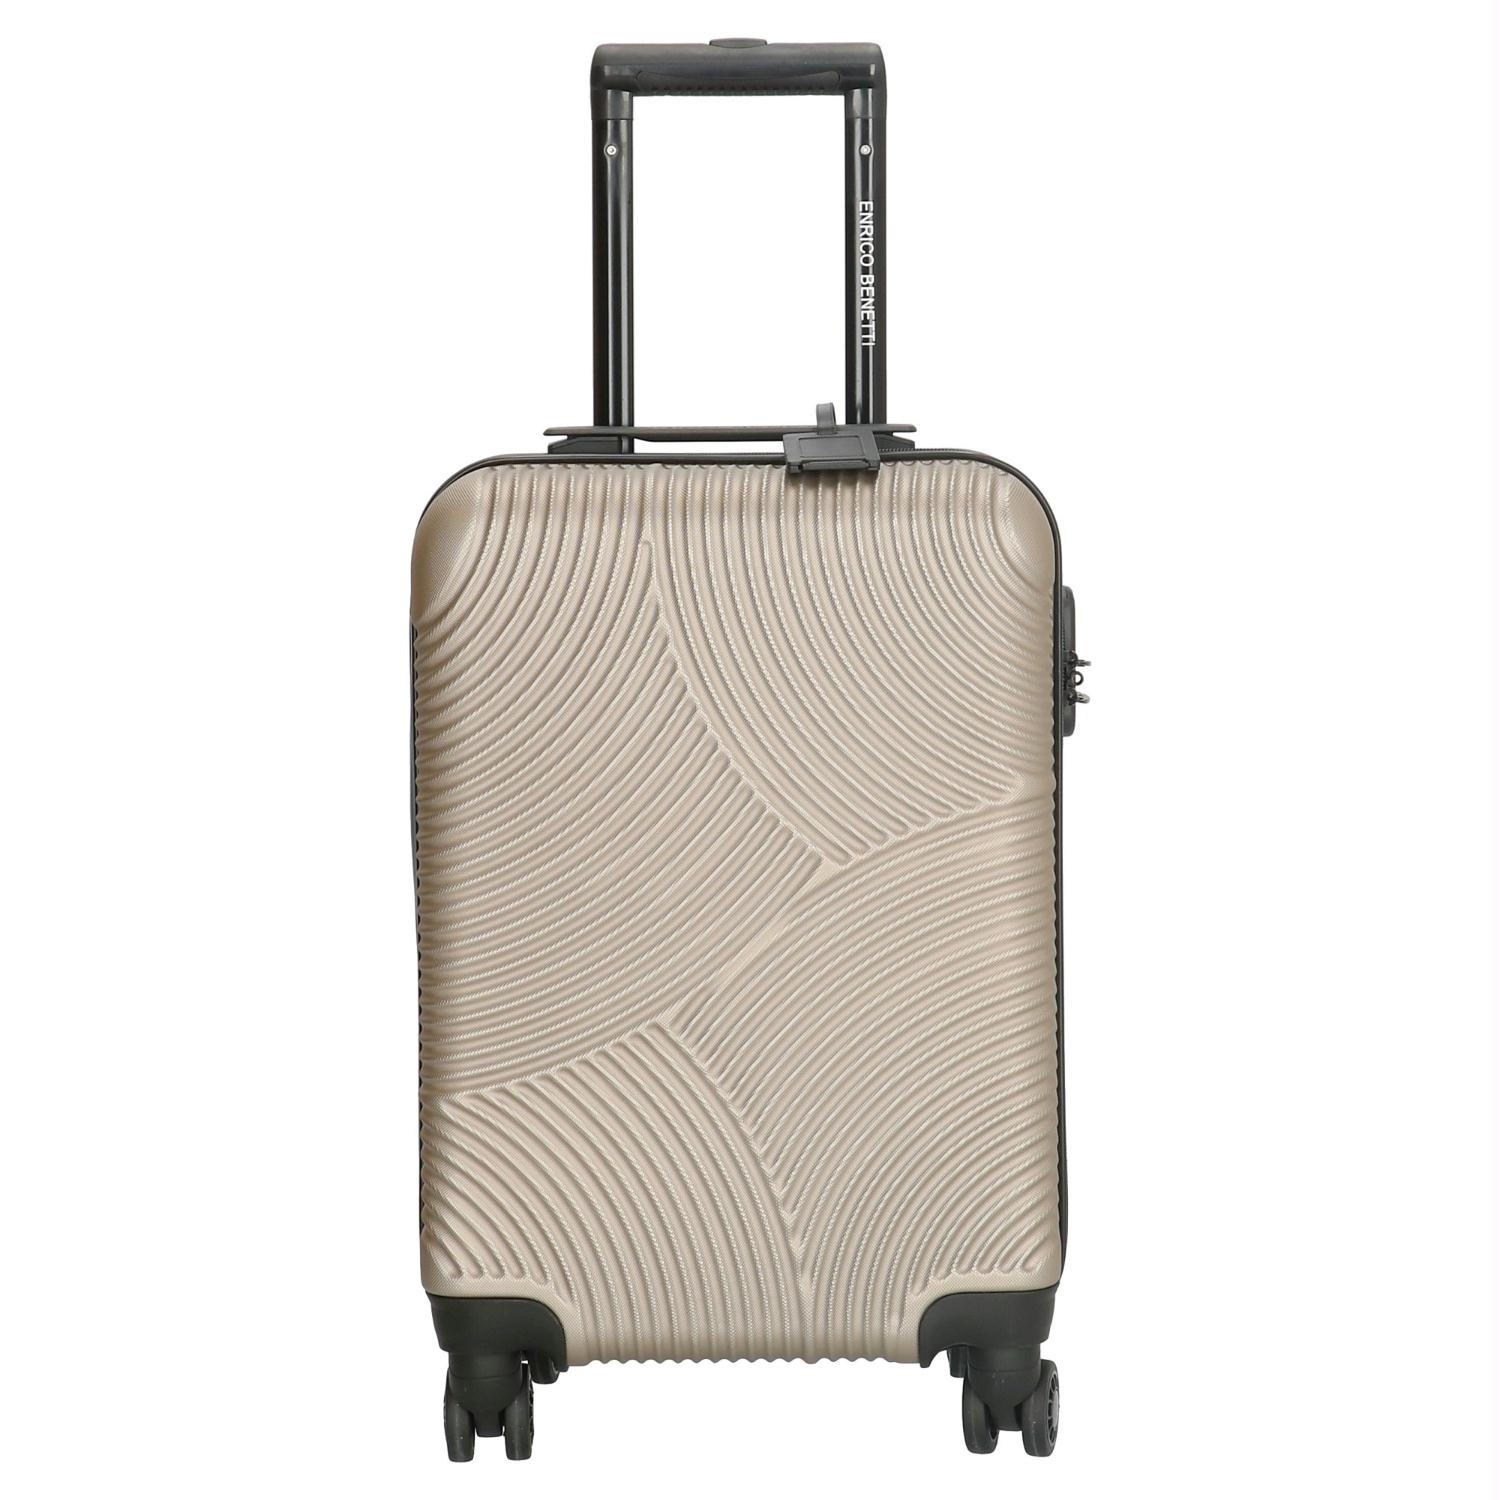 Enrico Benetti Louisville Handbagage koffer - 39040-50 - Champagne